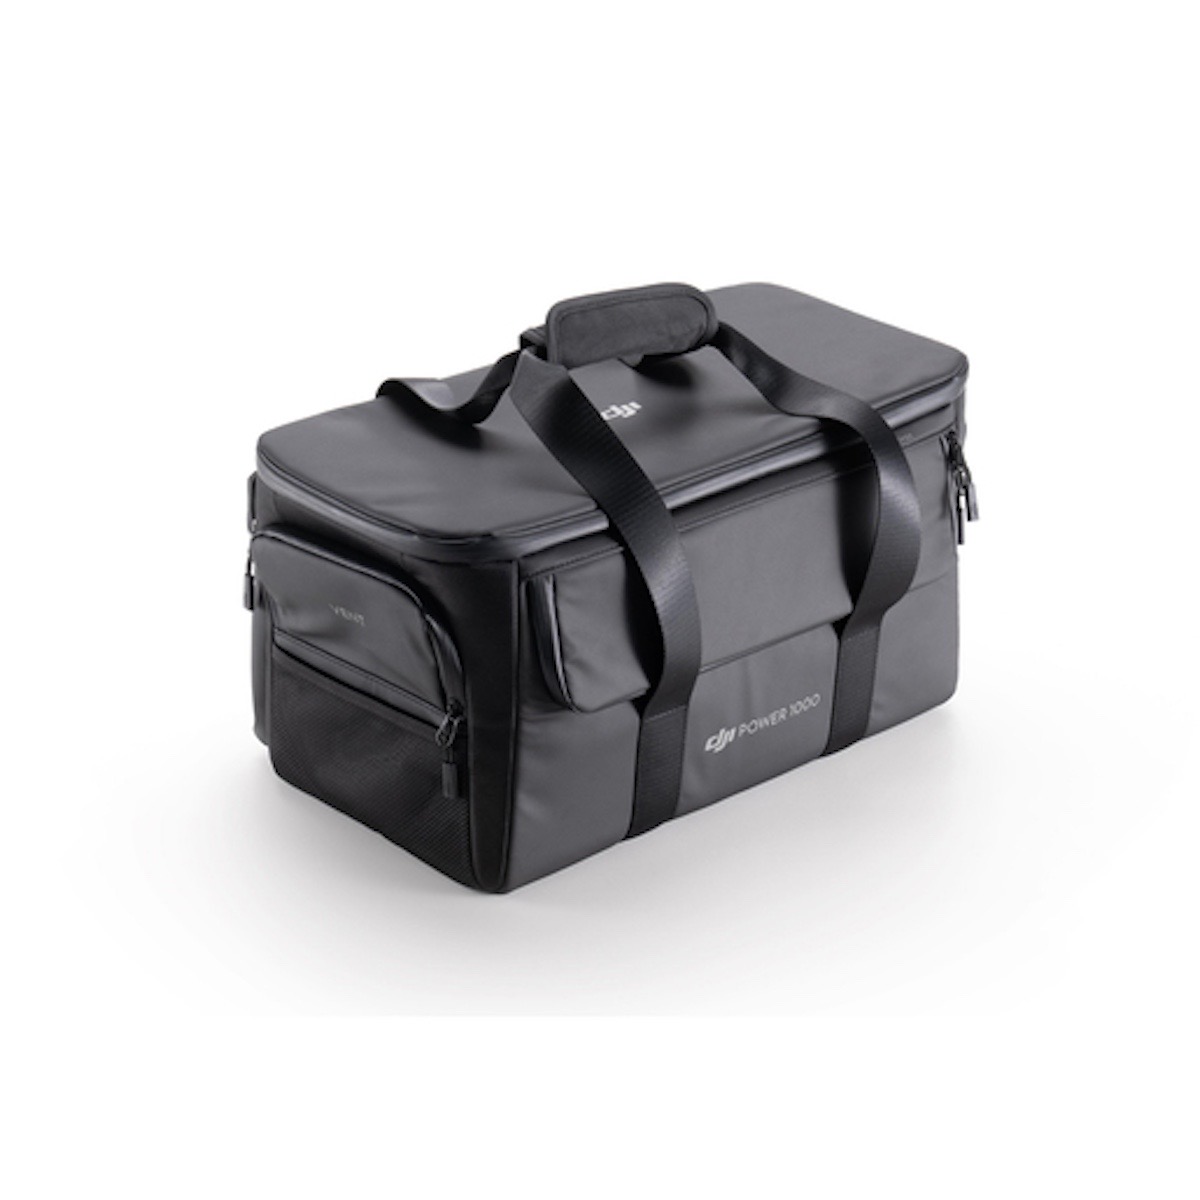 DJI Power 1000 Protective Storage Bag